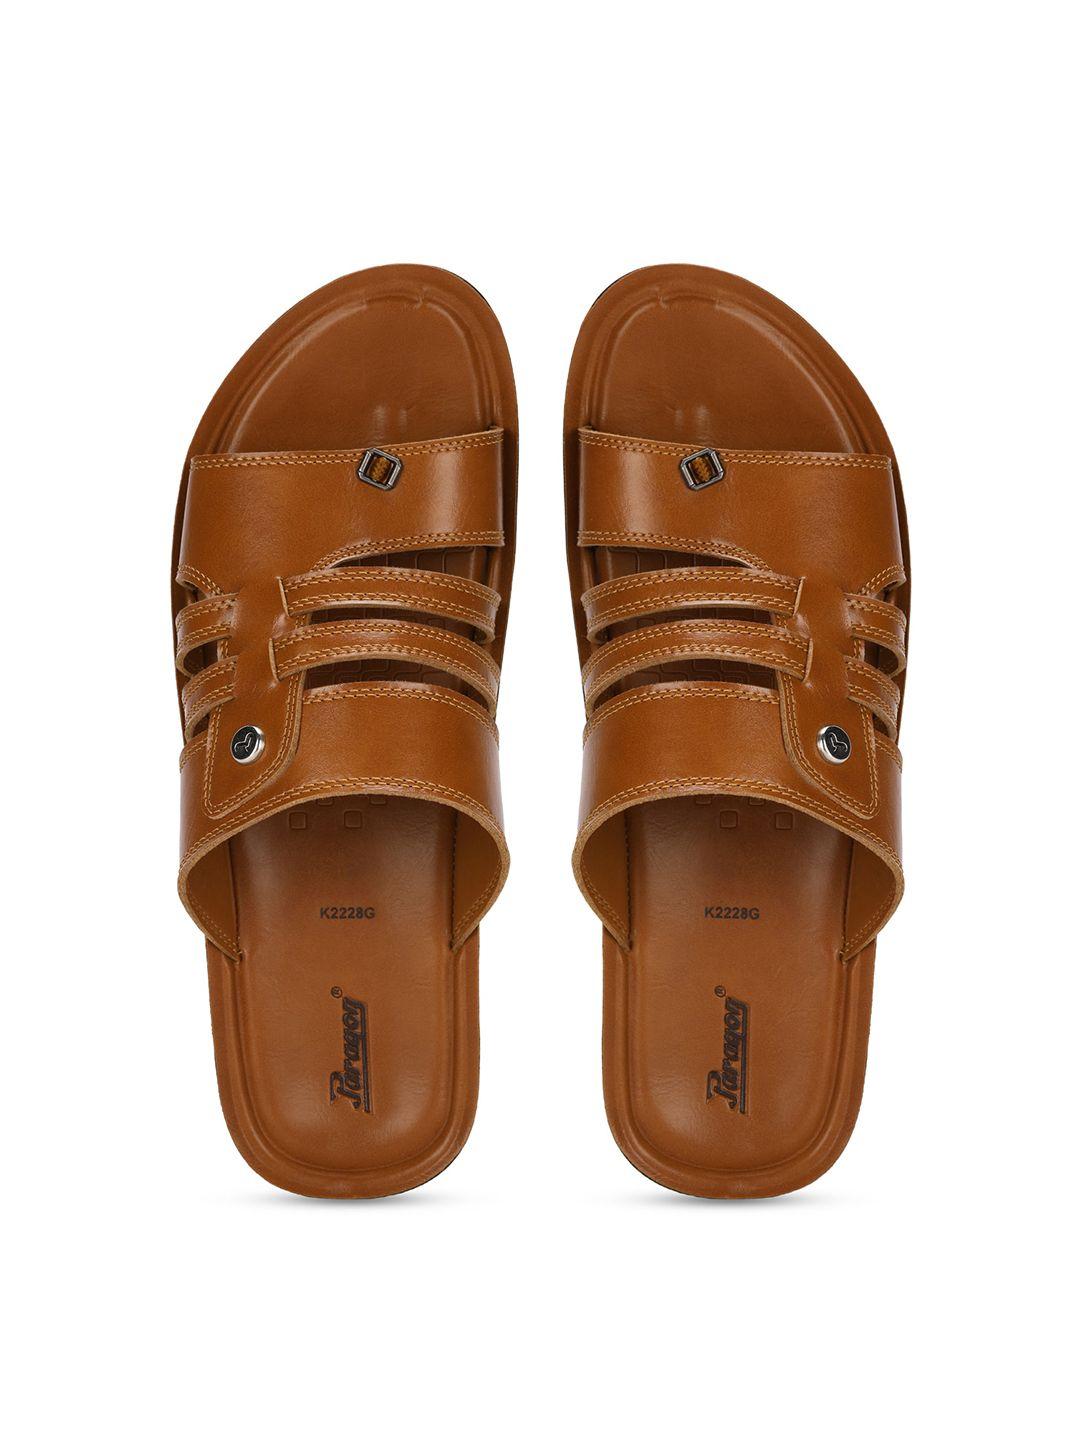 paragon men anti-skid sole & sturdy construction comfort sandals